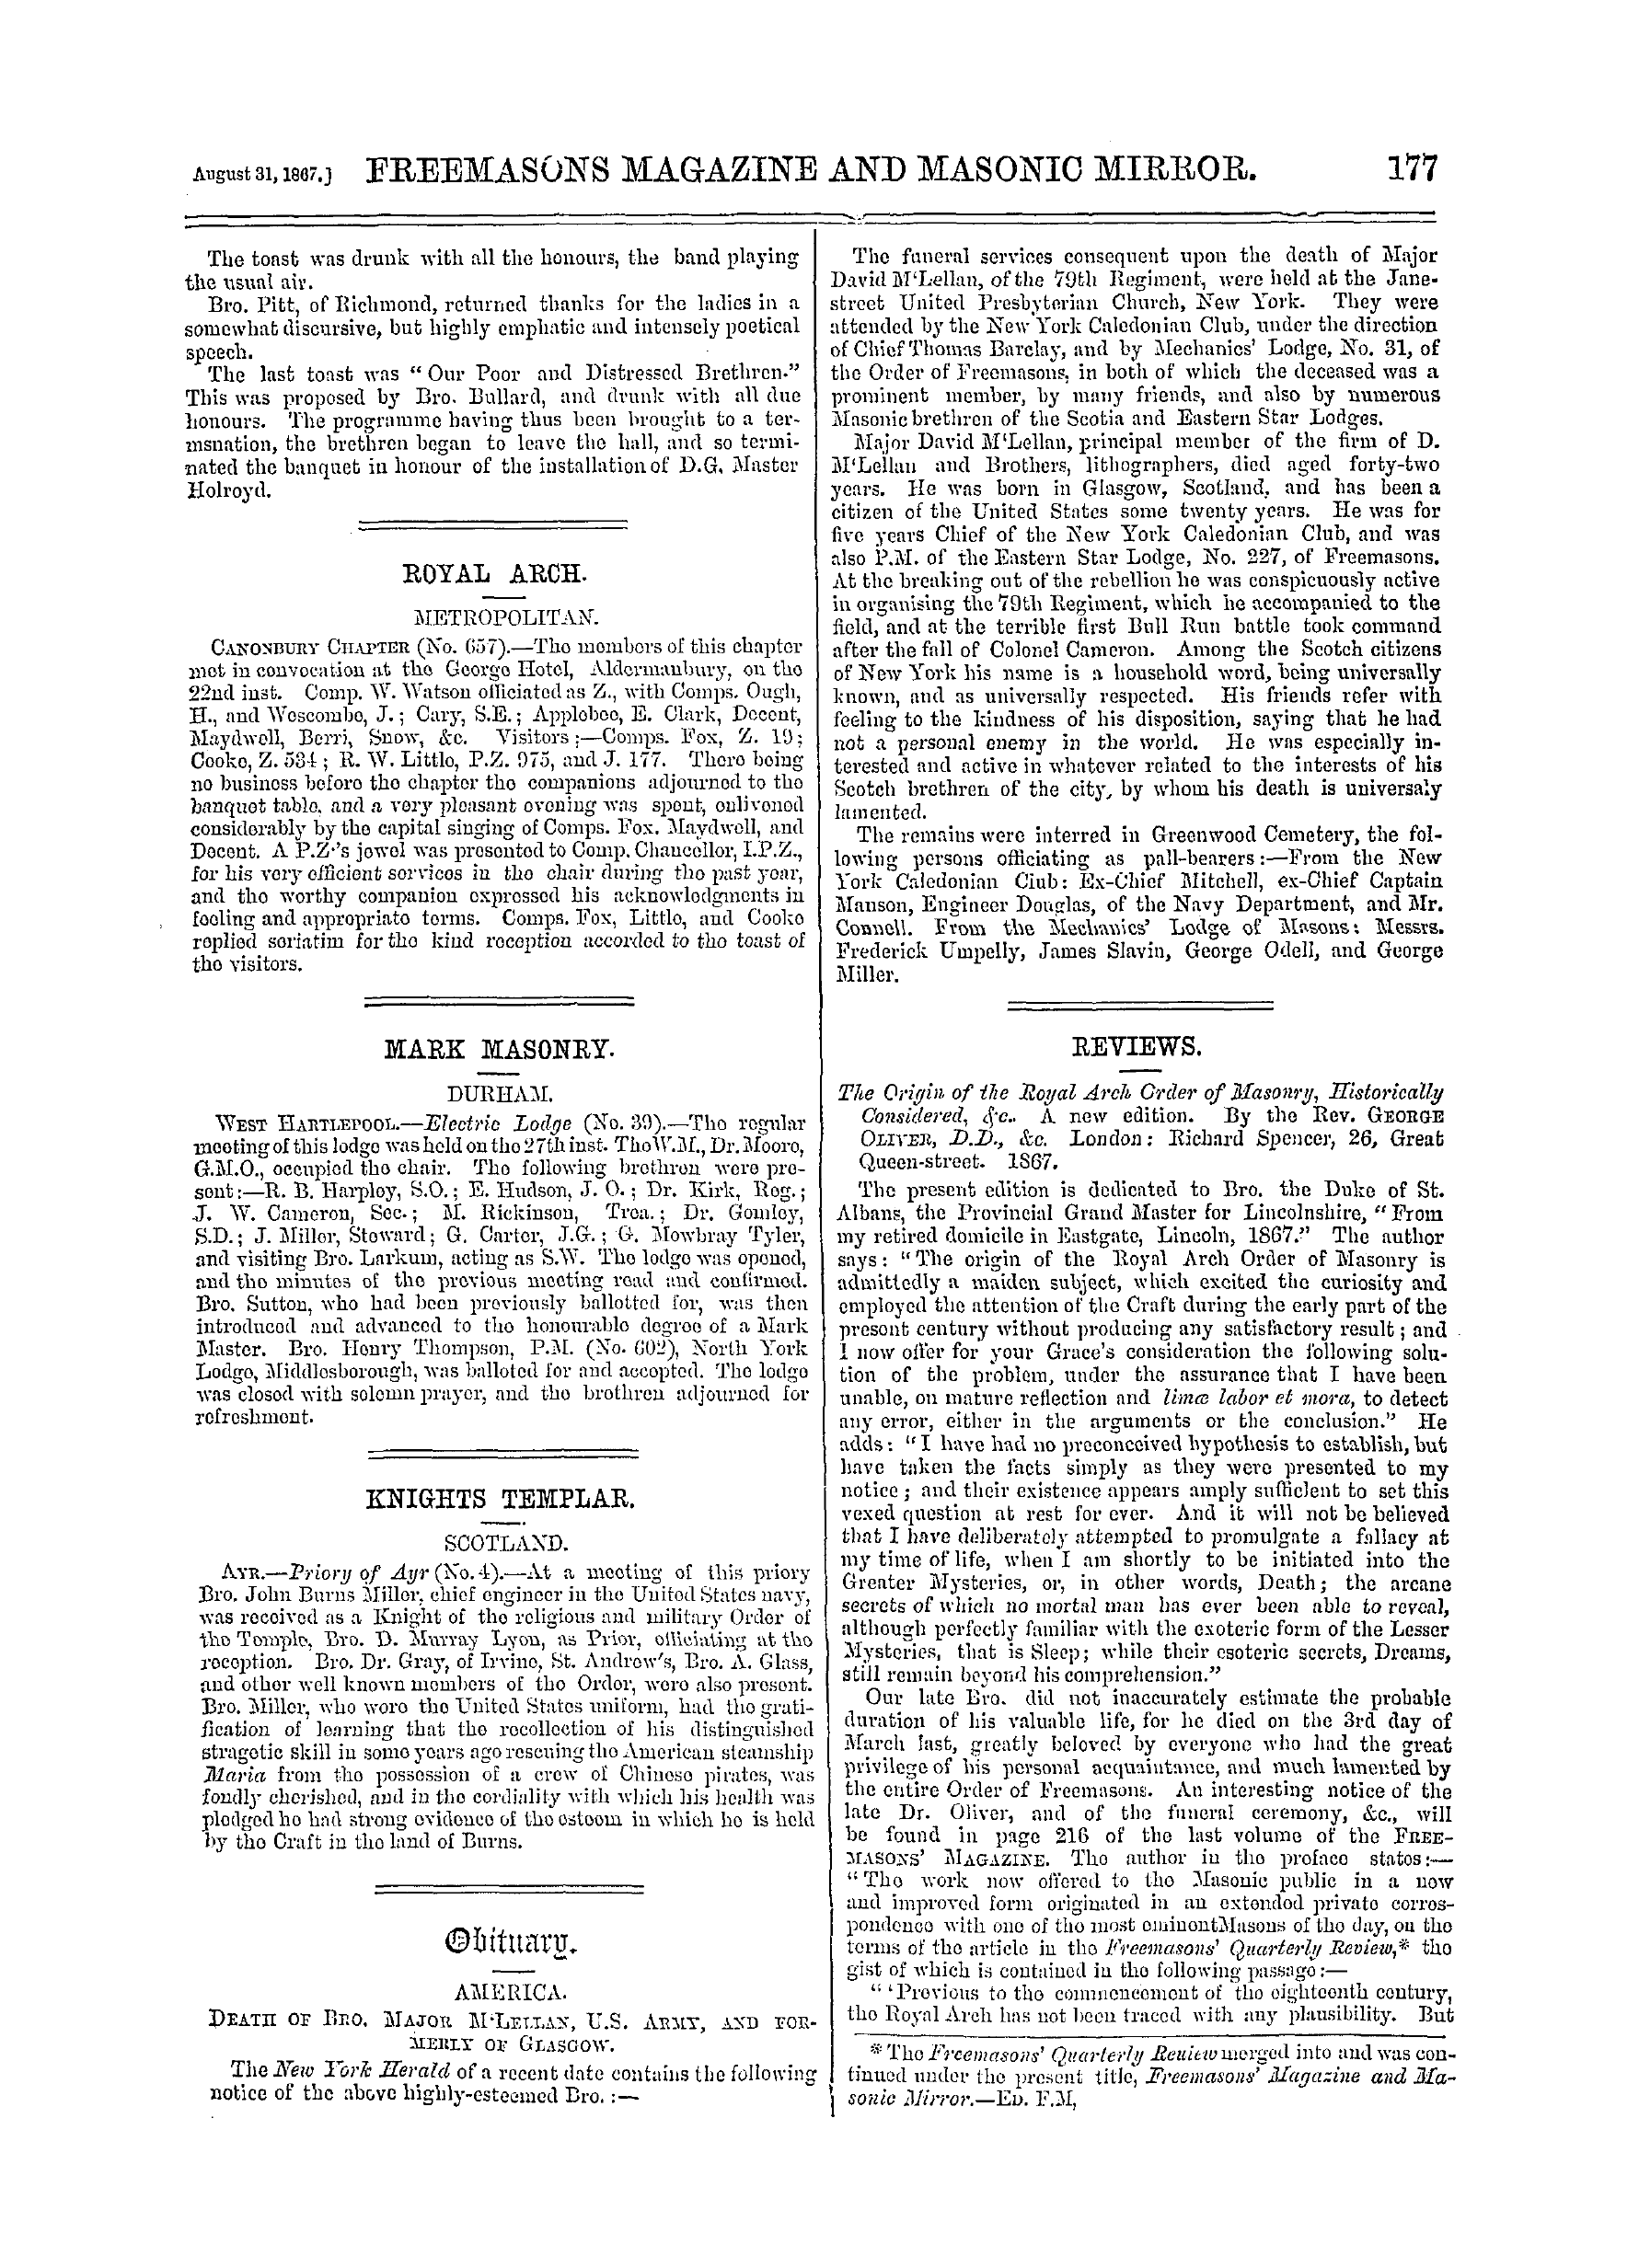 The Freemasons' Monthly Magazine: 1867-08-31 - Australia.